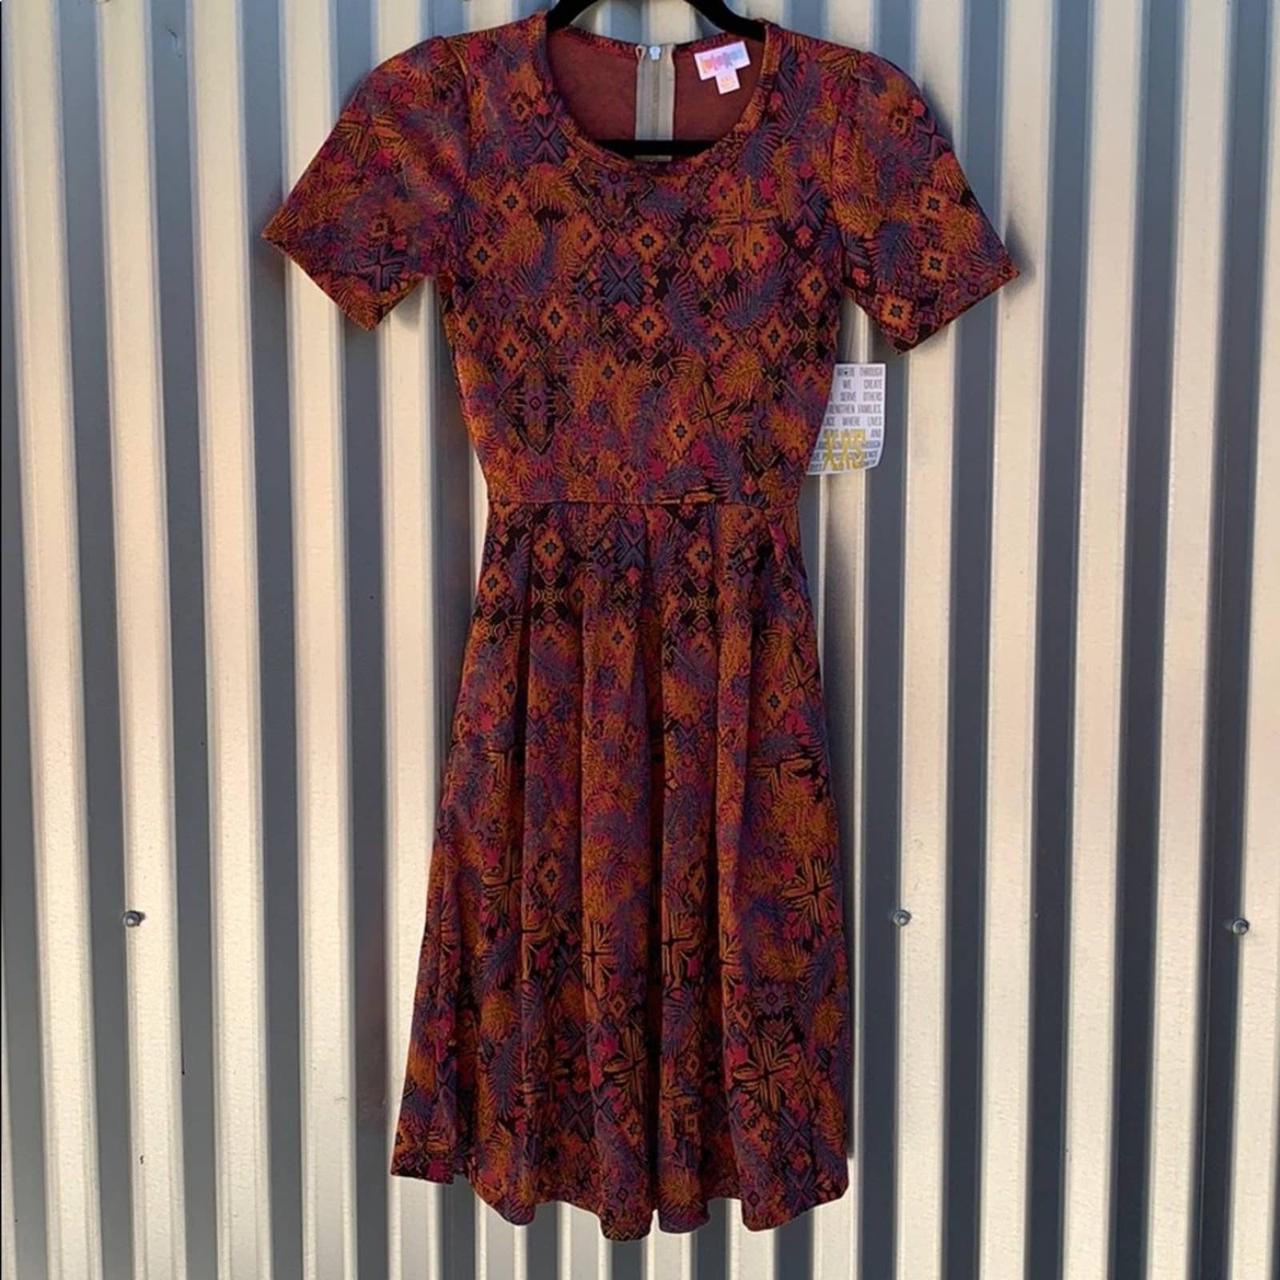 Lularoe Amelia dress. New with tags. Size XL. Has - Depop